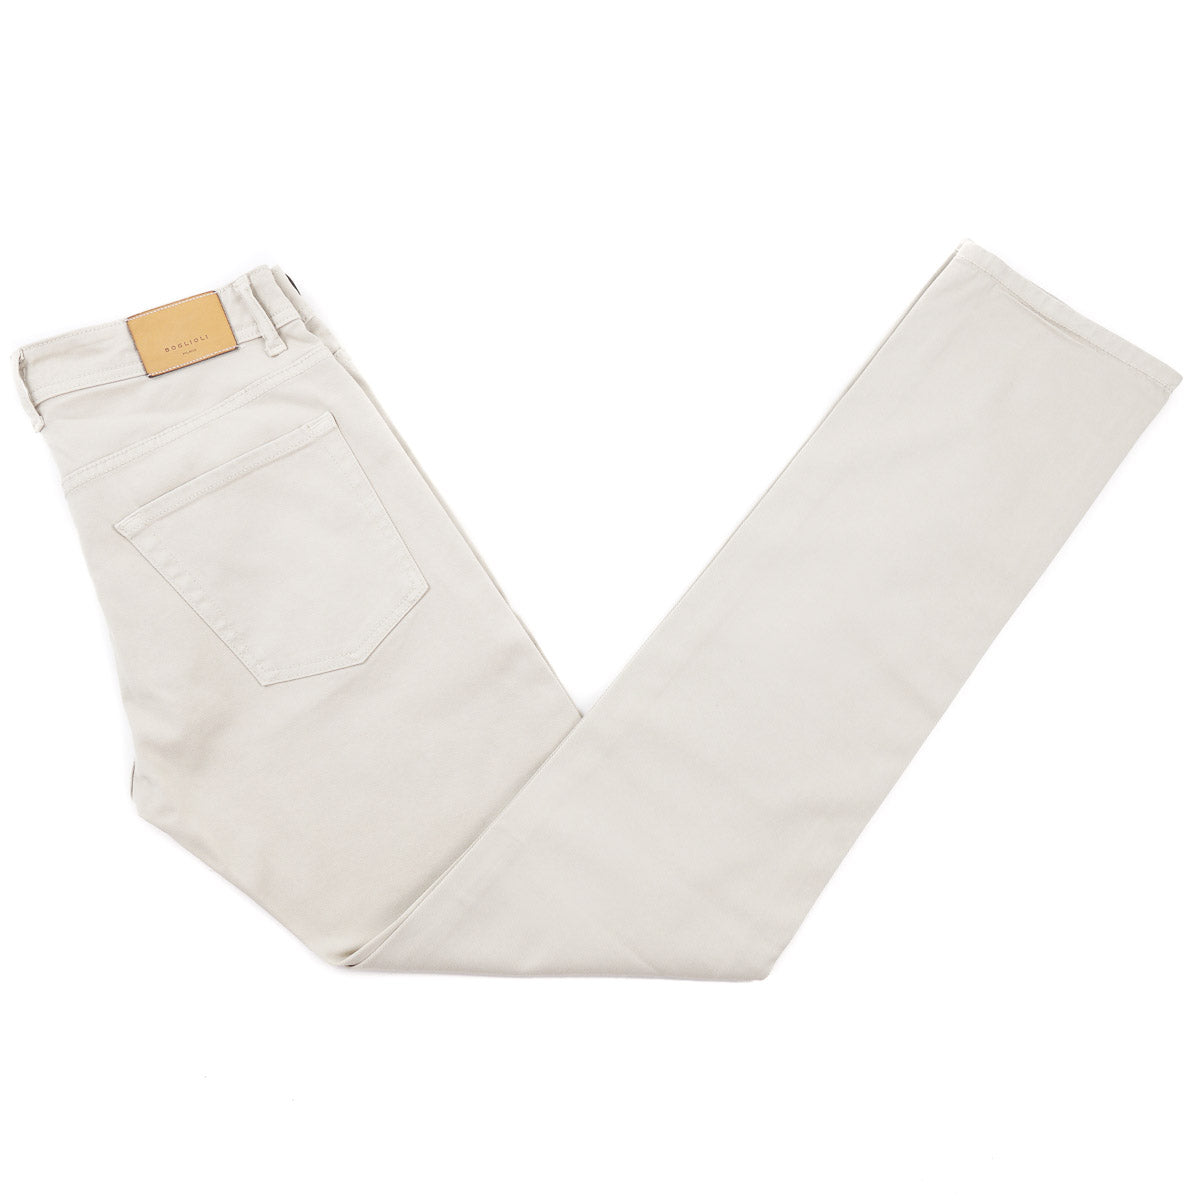 Boglioli Twill Denim 5-Pocket Pants - Top Shelf Apparel